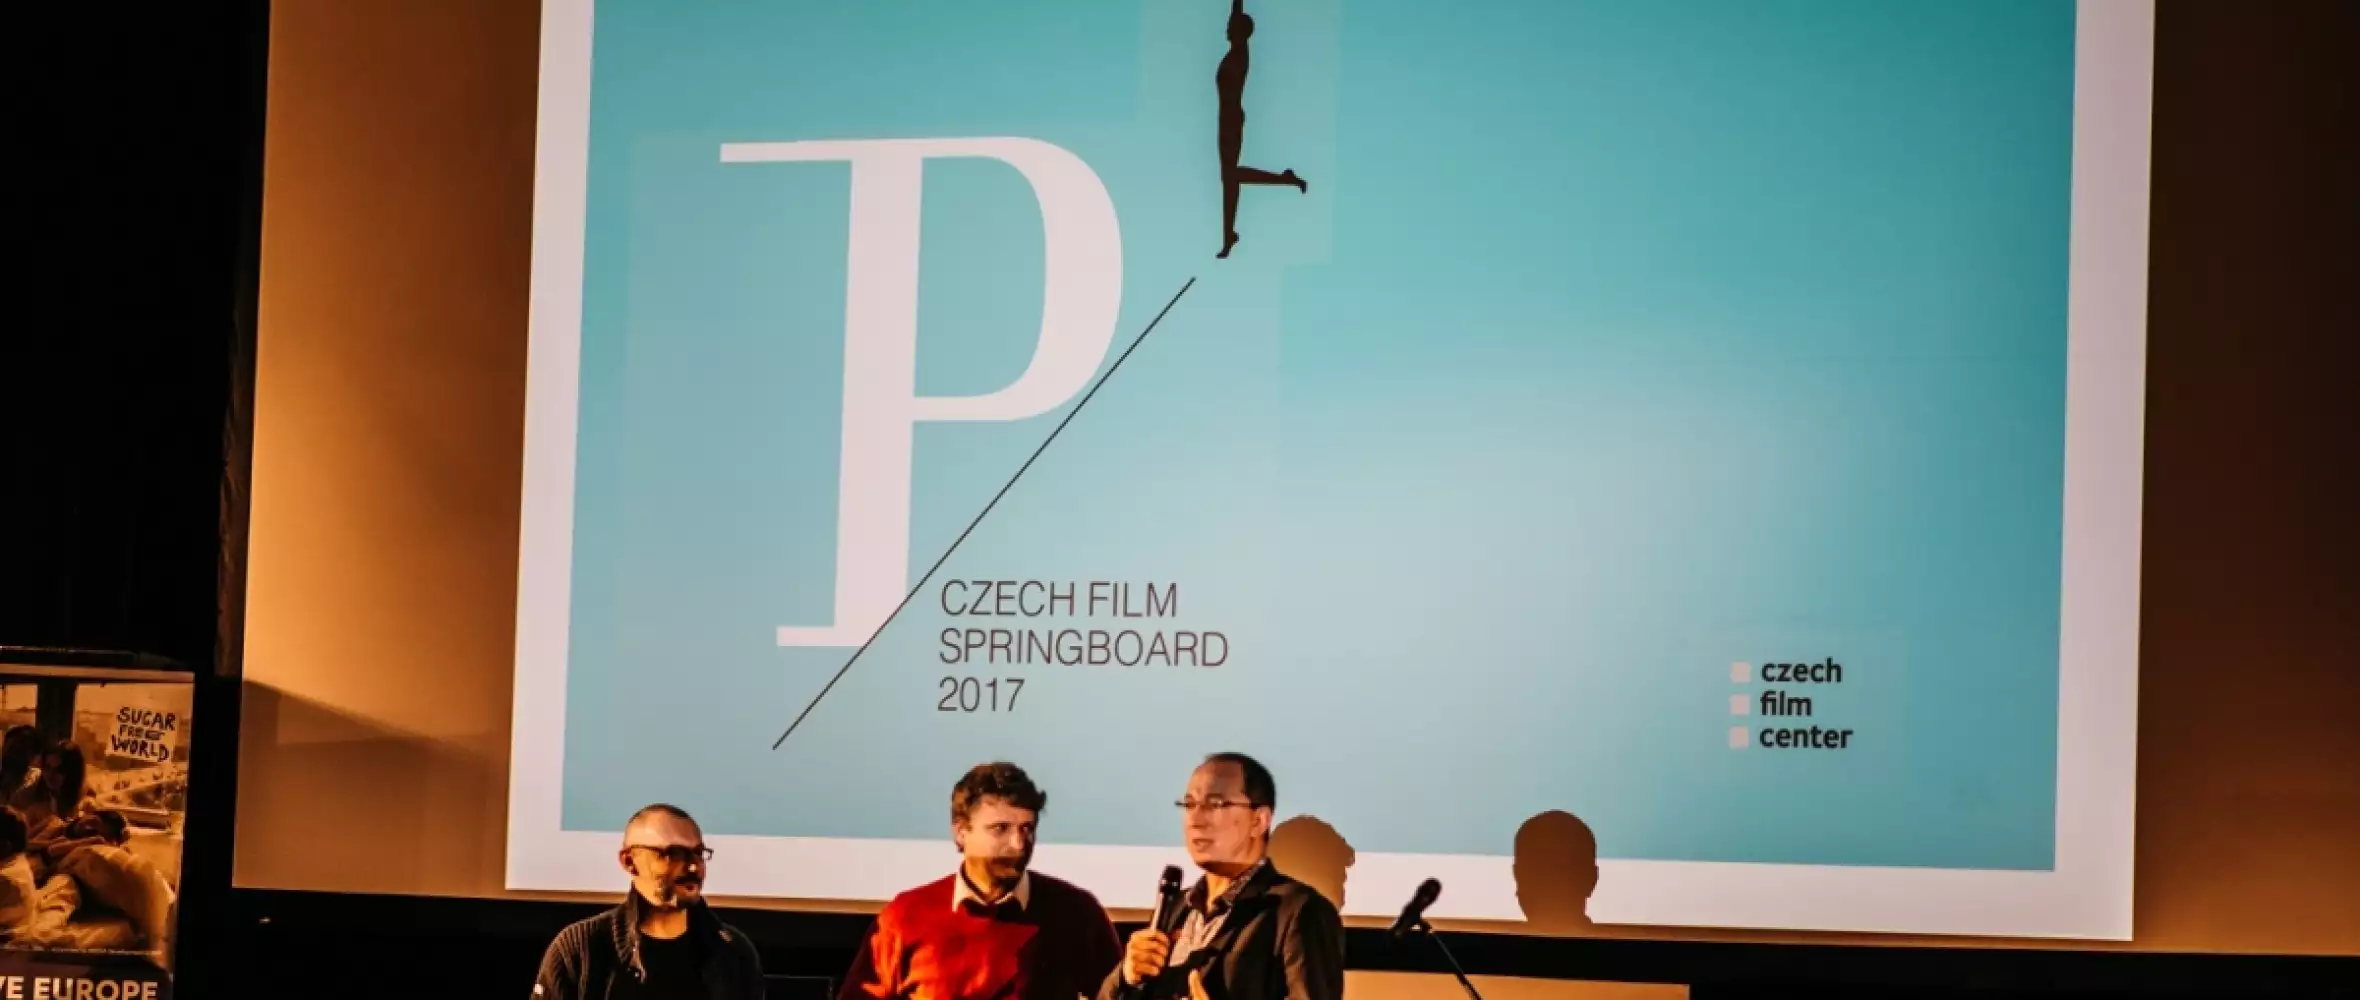 Czech Film Springboard 2017